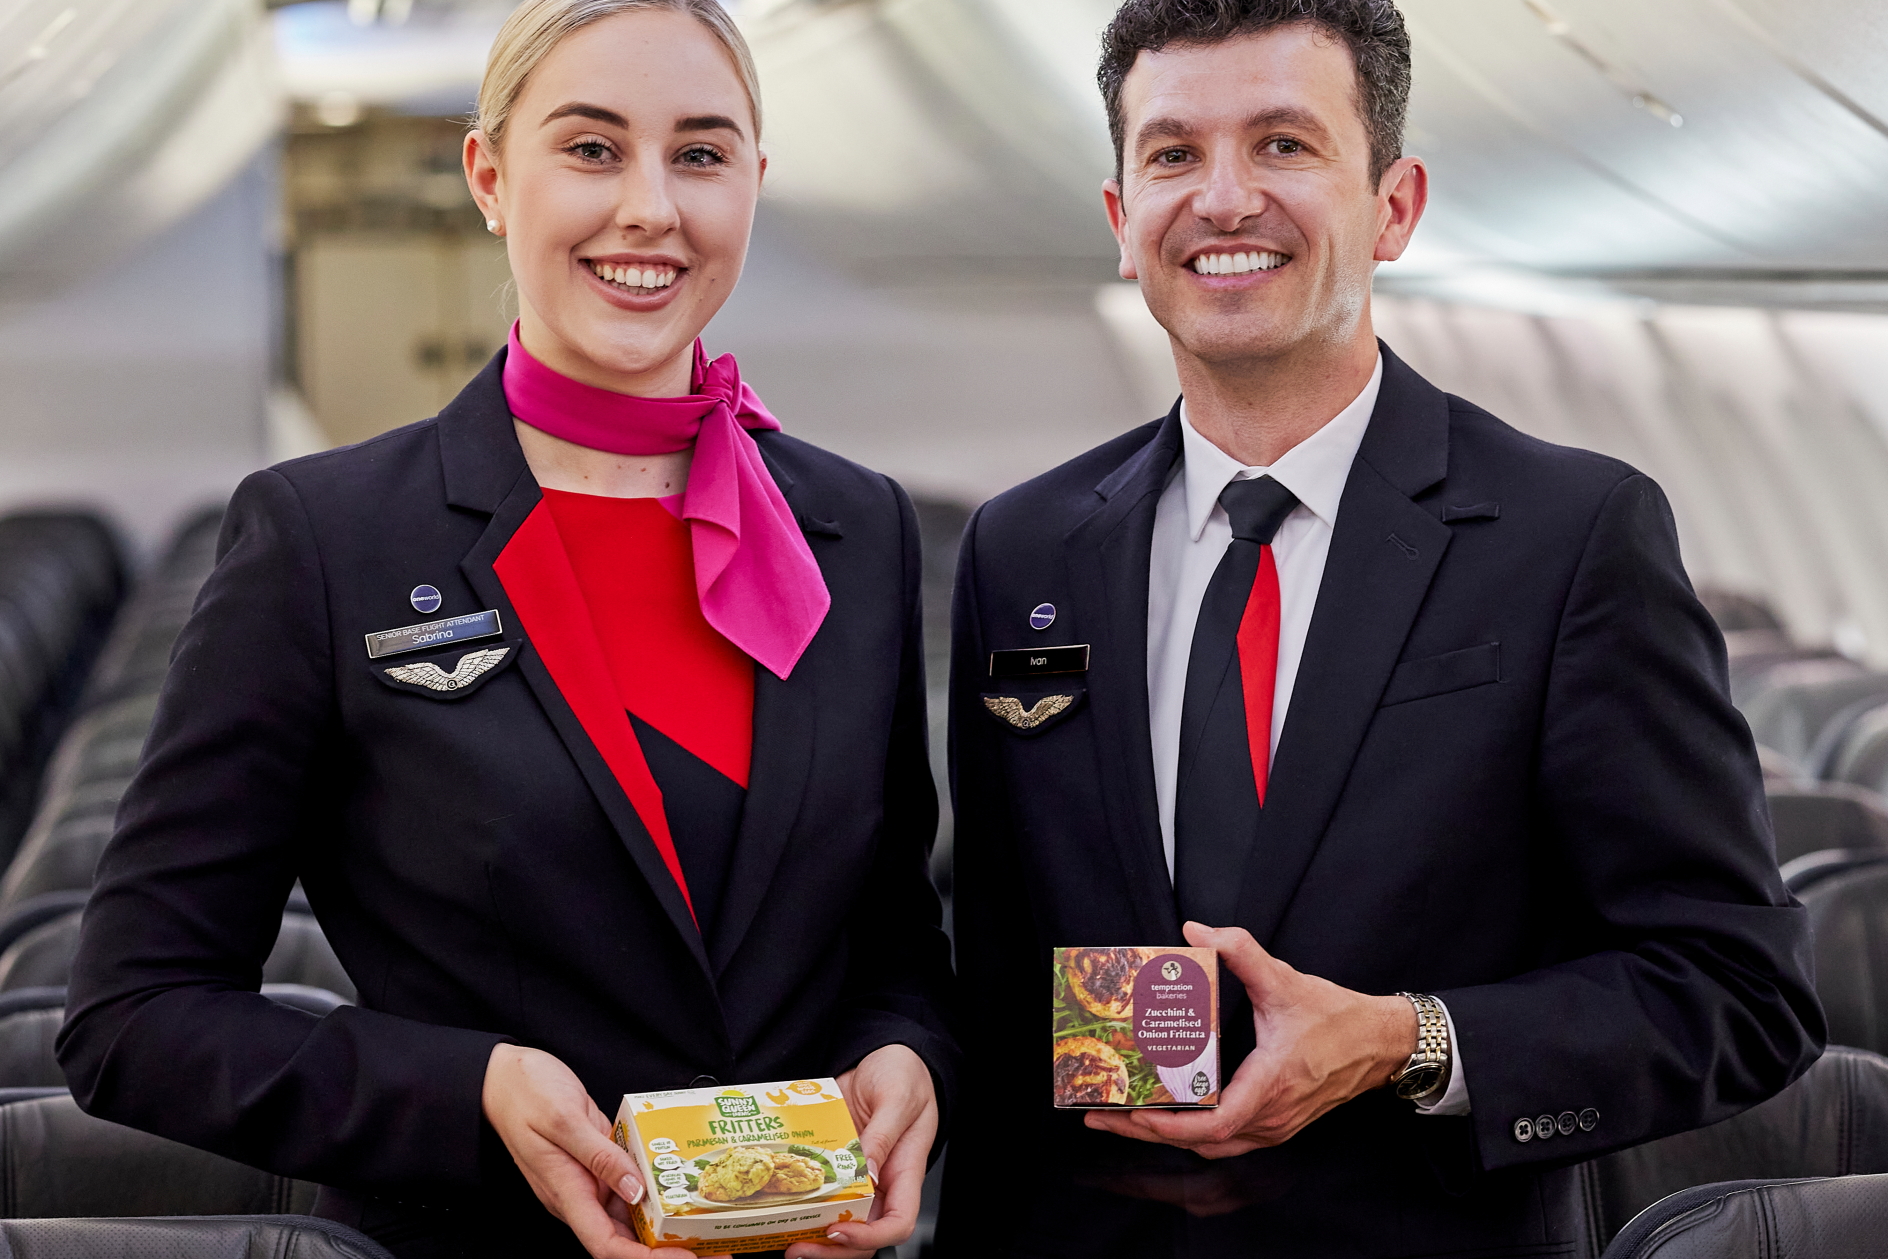 Qantas Launches New Economy Class Menu on Domestic Flights